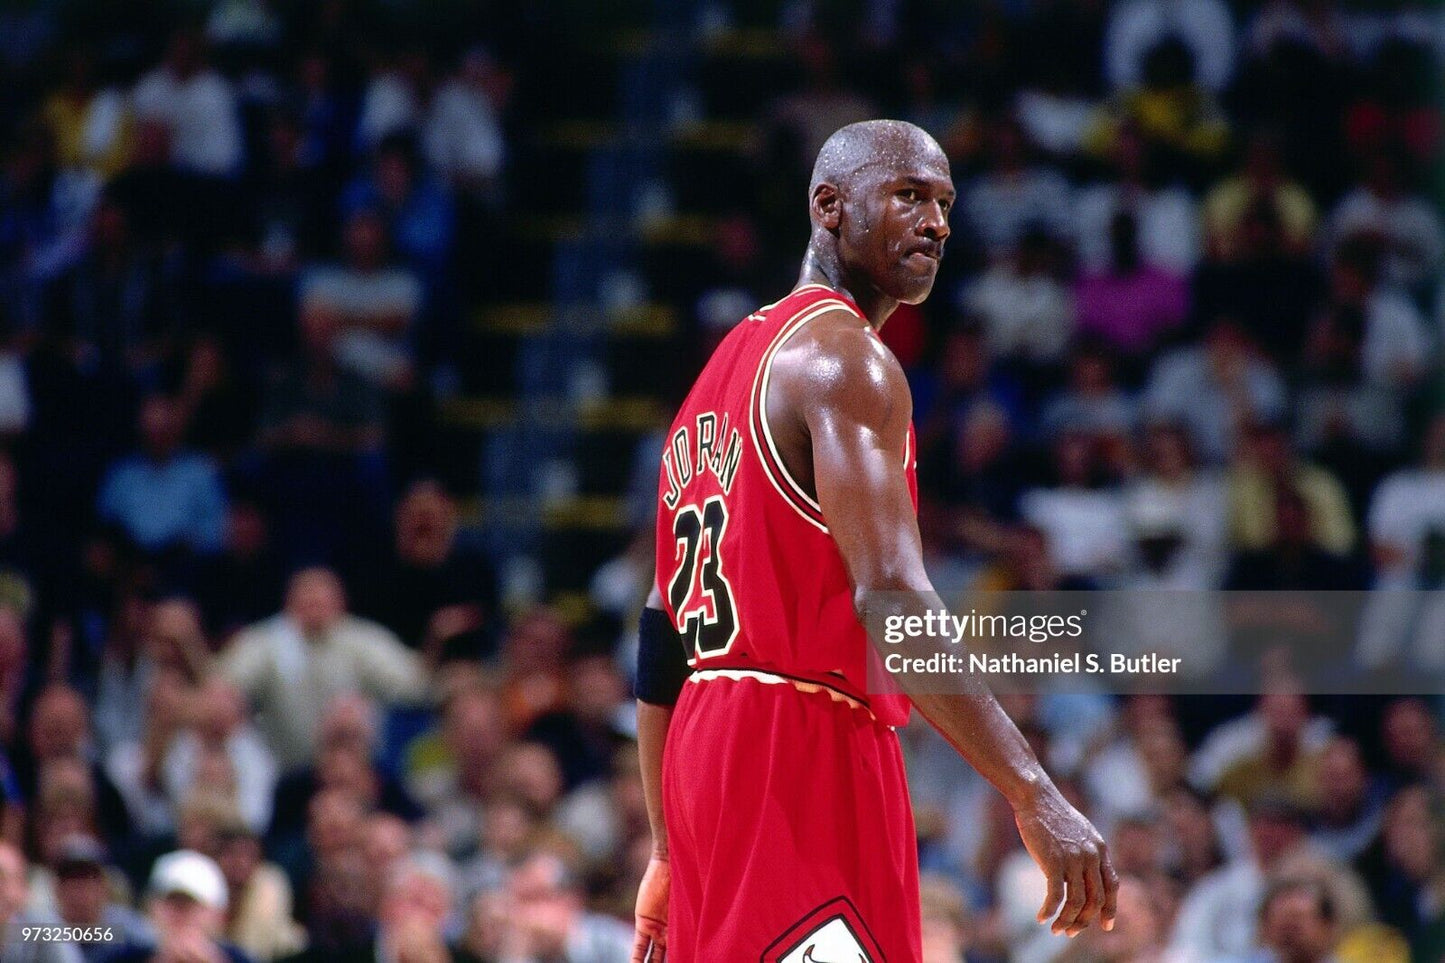 100% Authentic Michael Jordan Mitchell Ness 97 98 Bulls Jersey Size 40 M Mens